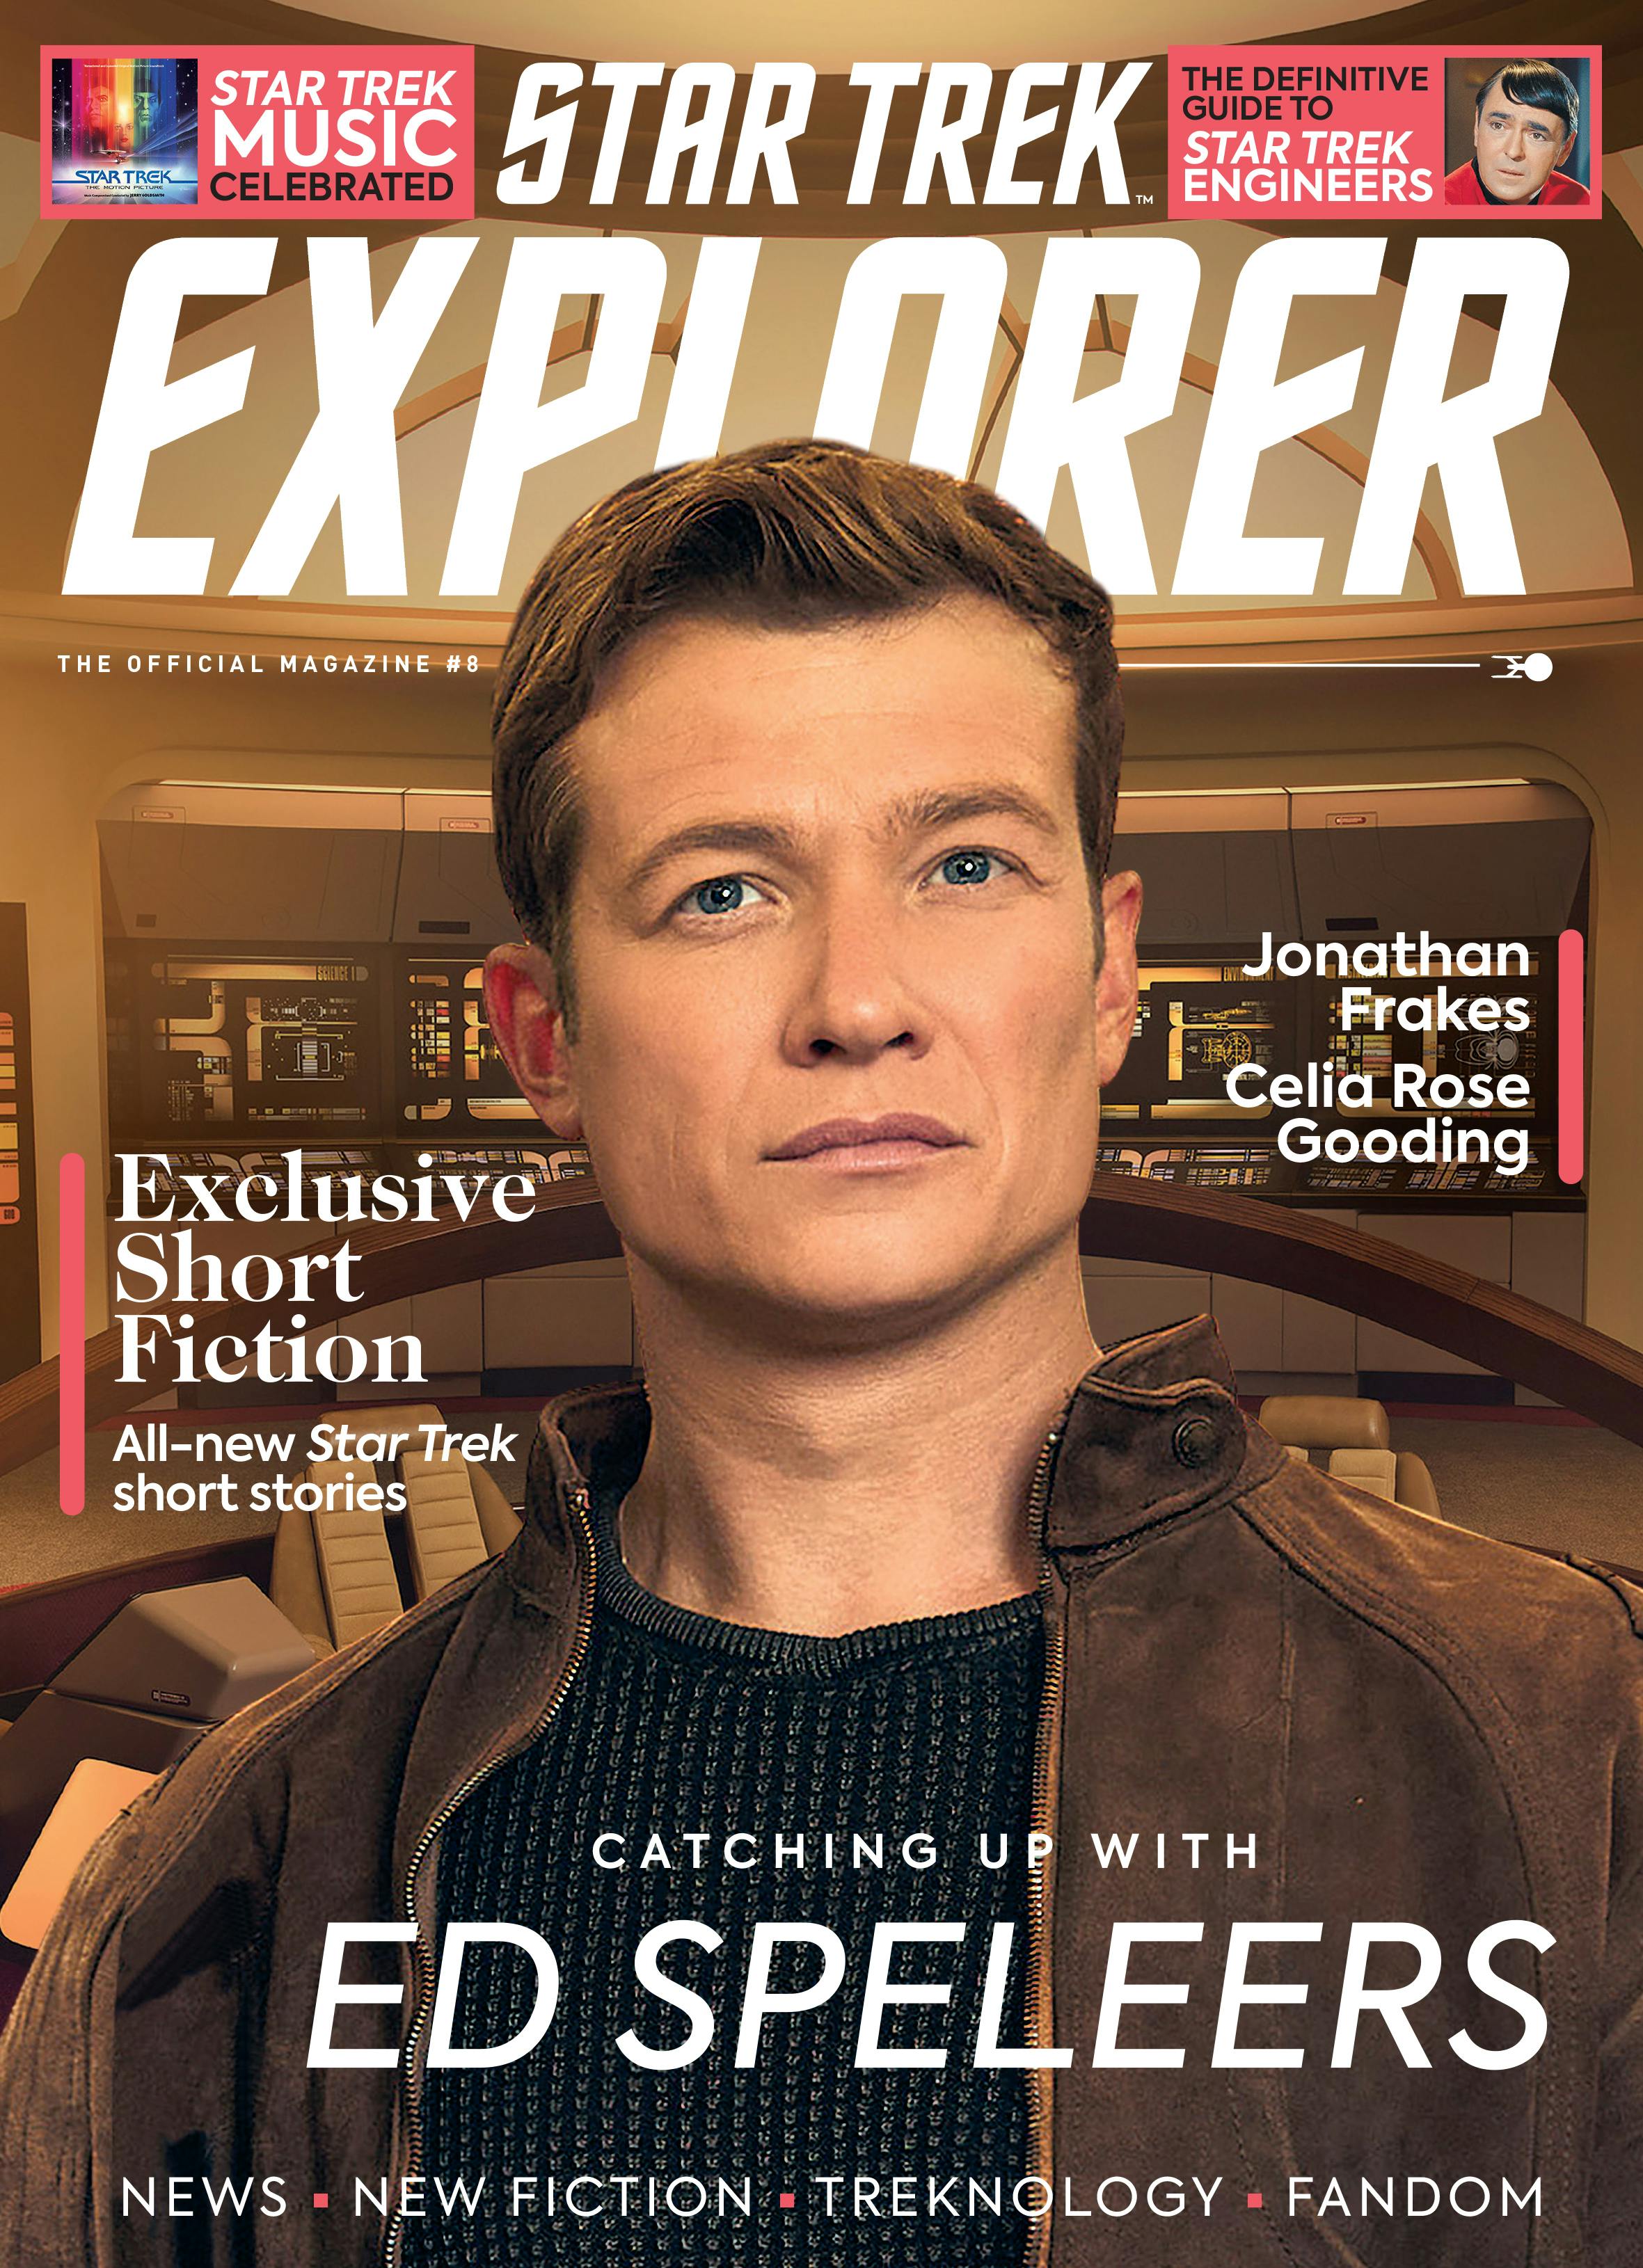 Star Trek Explorer #8 magazine newsstand cover featuring Star Trek: Picard's Ed Speleers